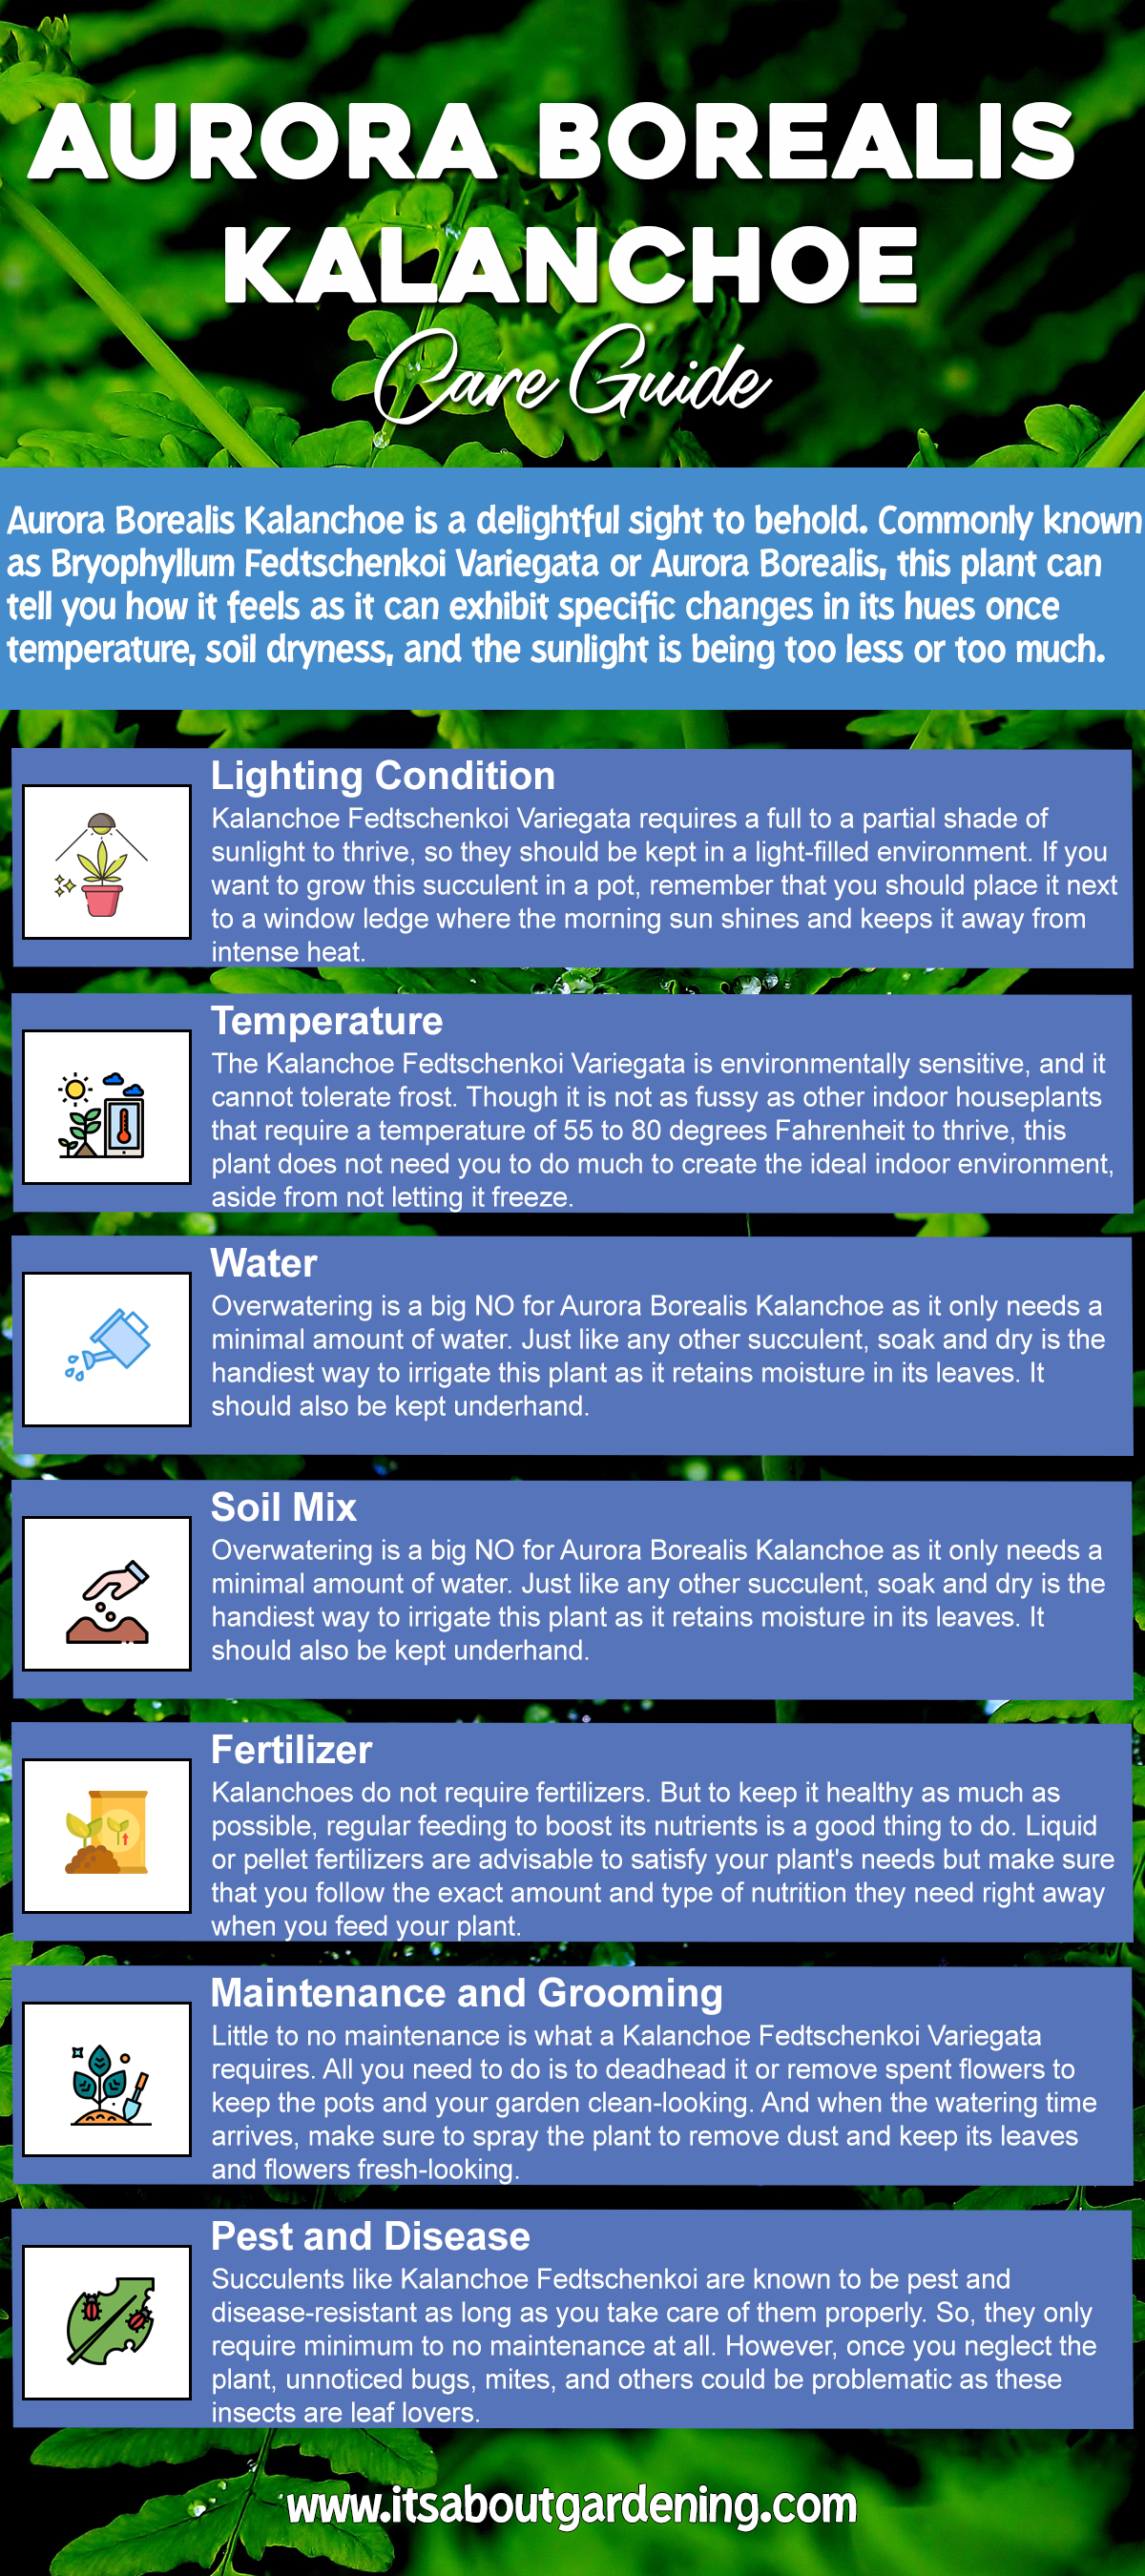 Aurora Borealis Kalanchoe Care Guide Infographic